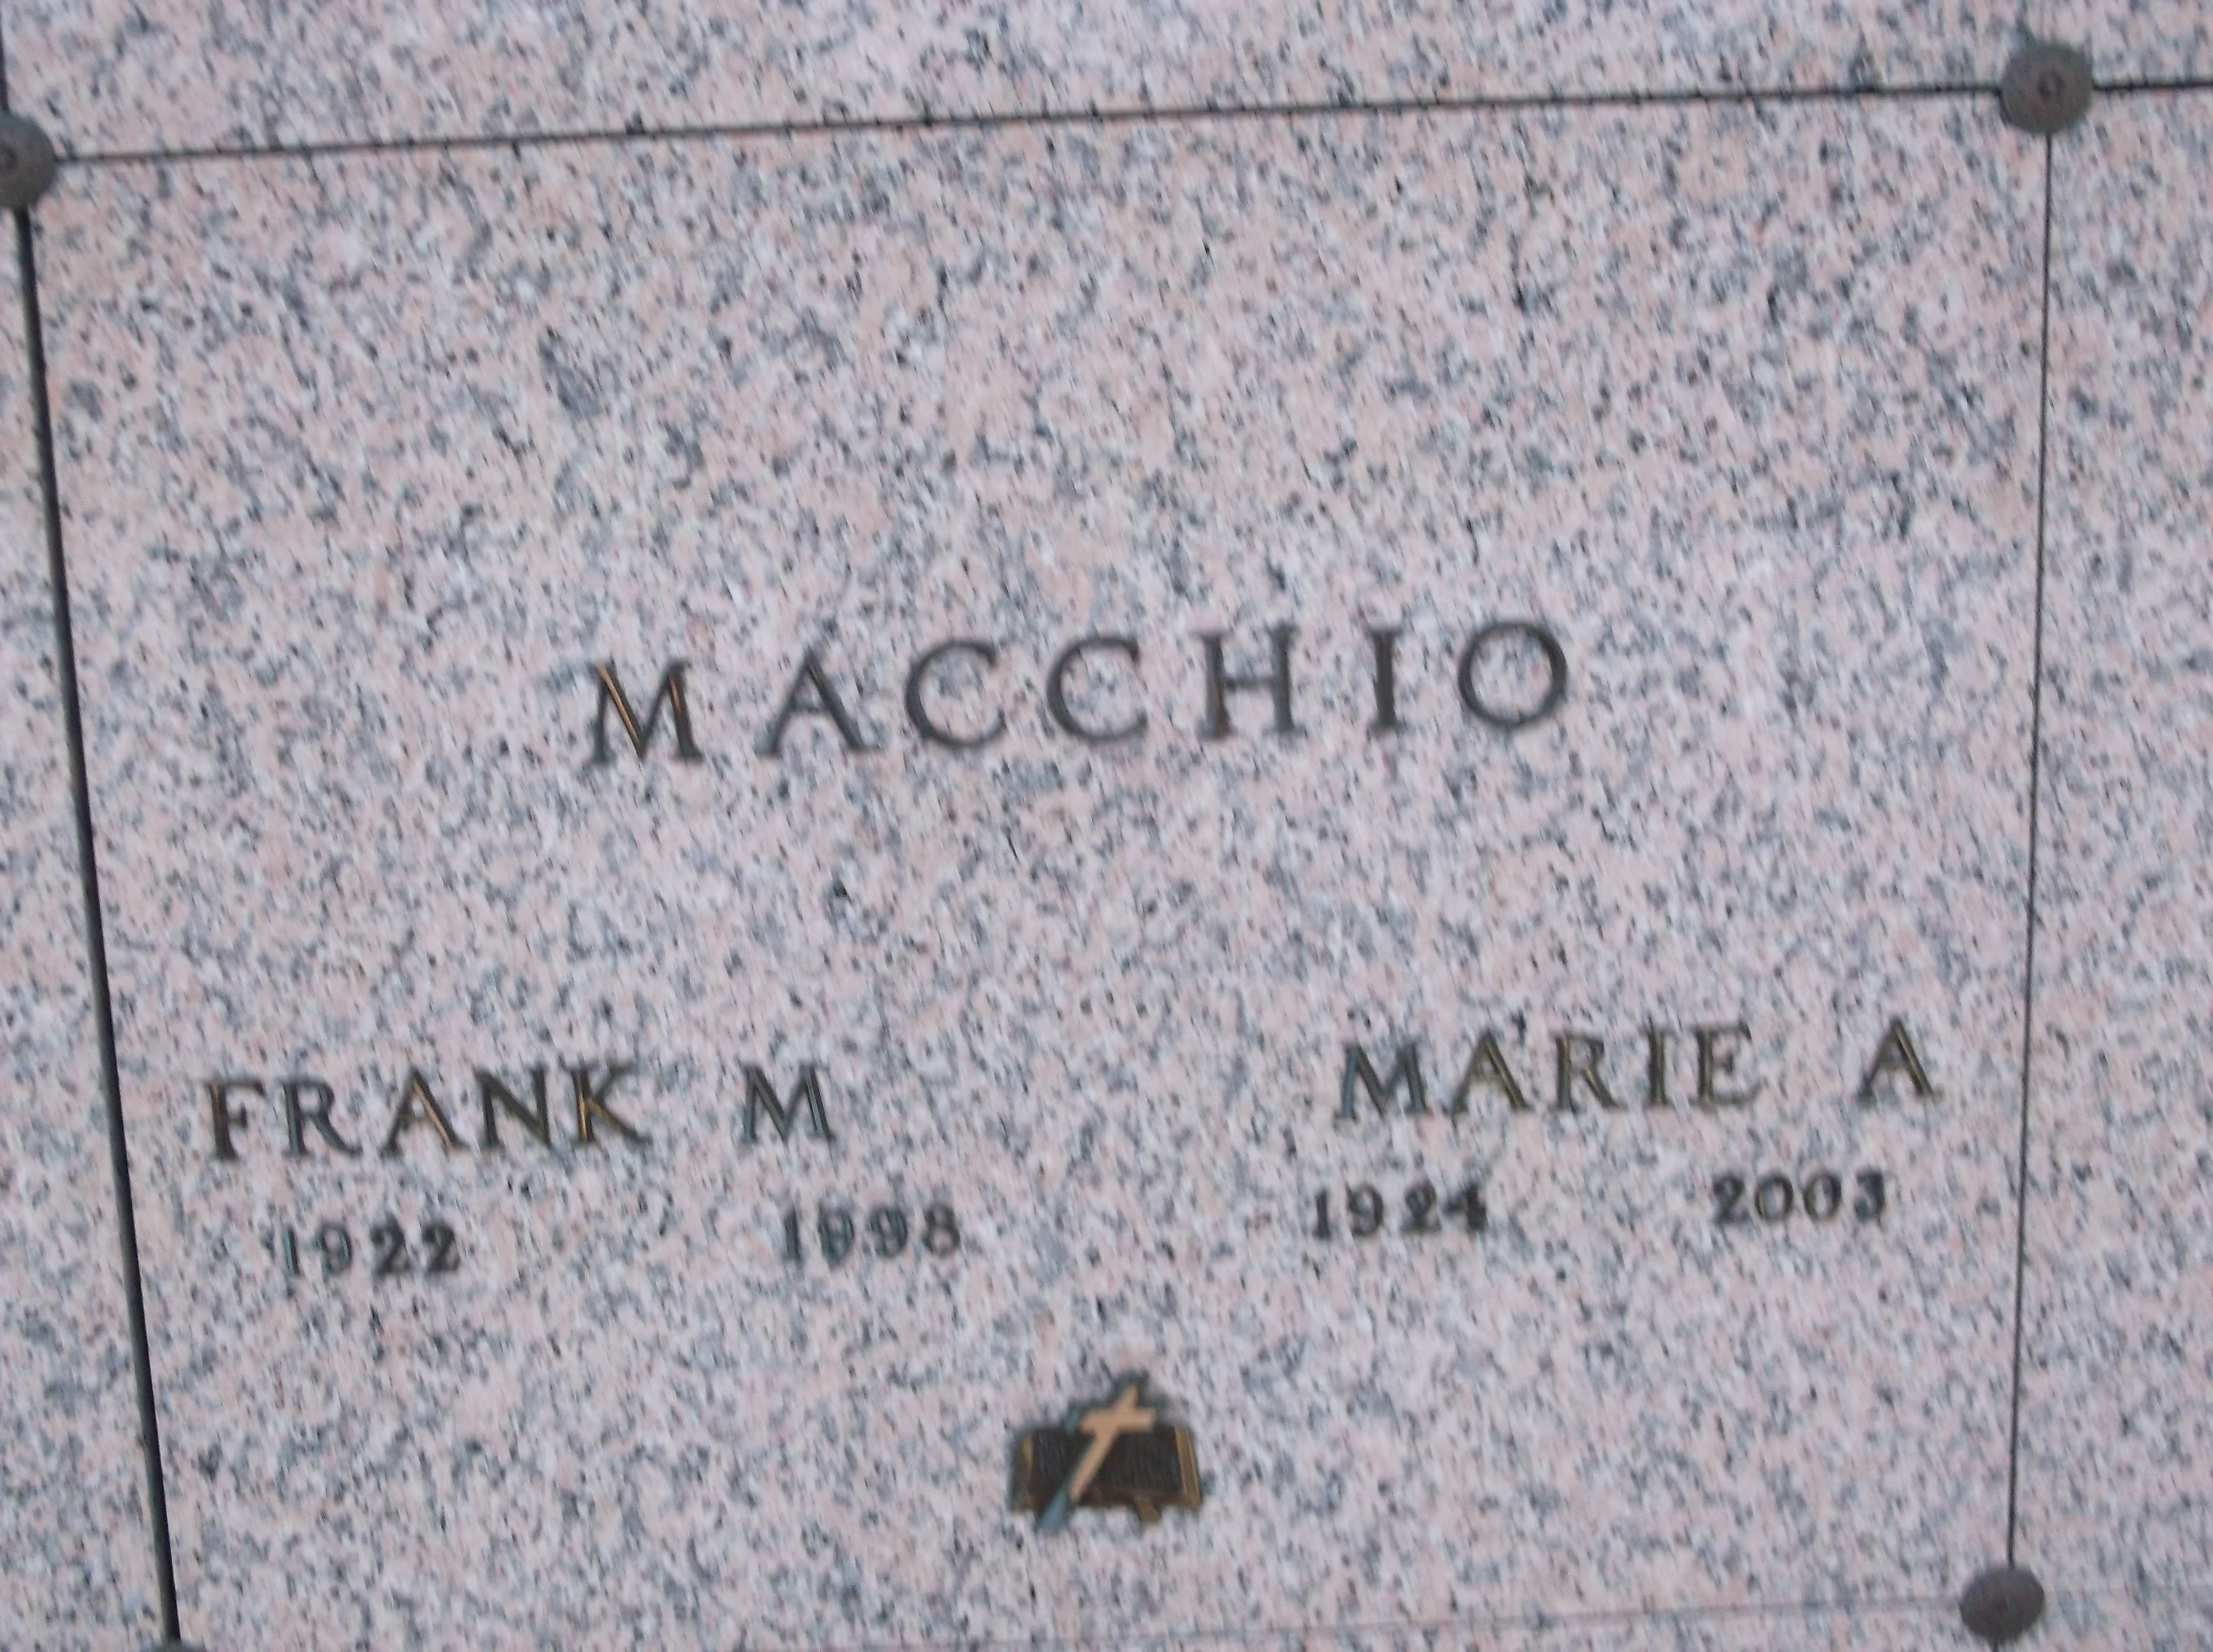 Frank M Macchio